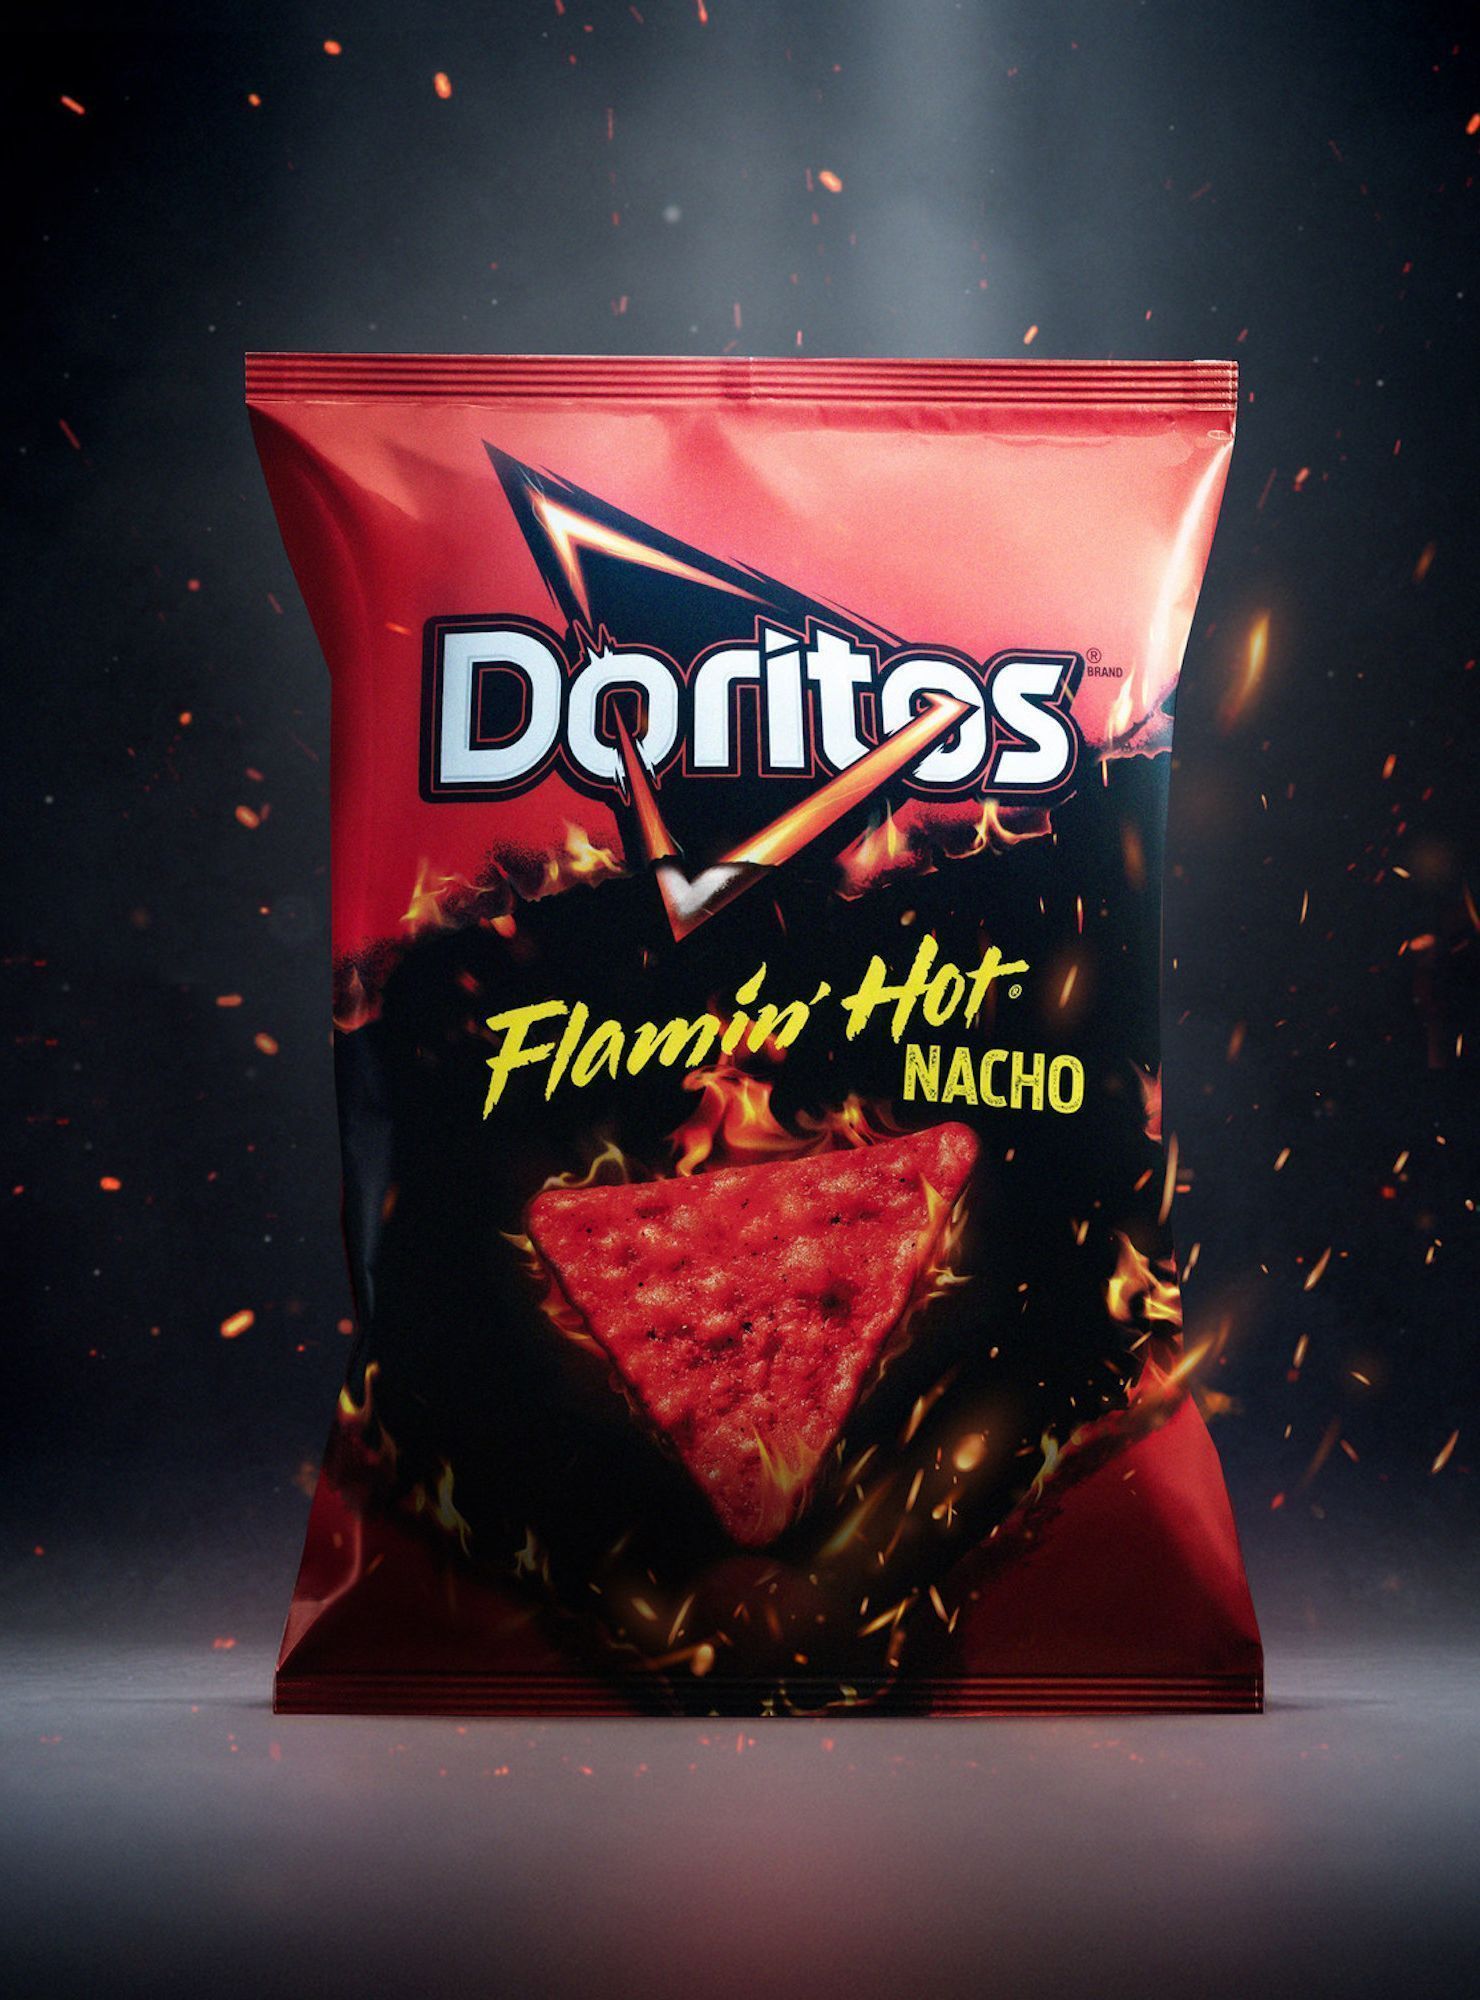 A bag of Doritos Flaming Hot Nacho tortilla chips on a black background with sparks - Doritos